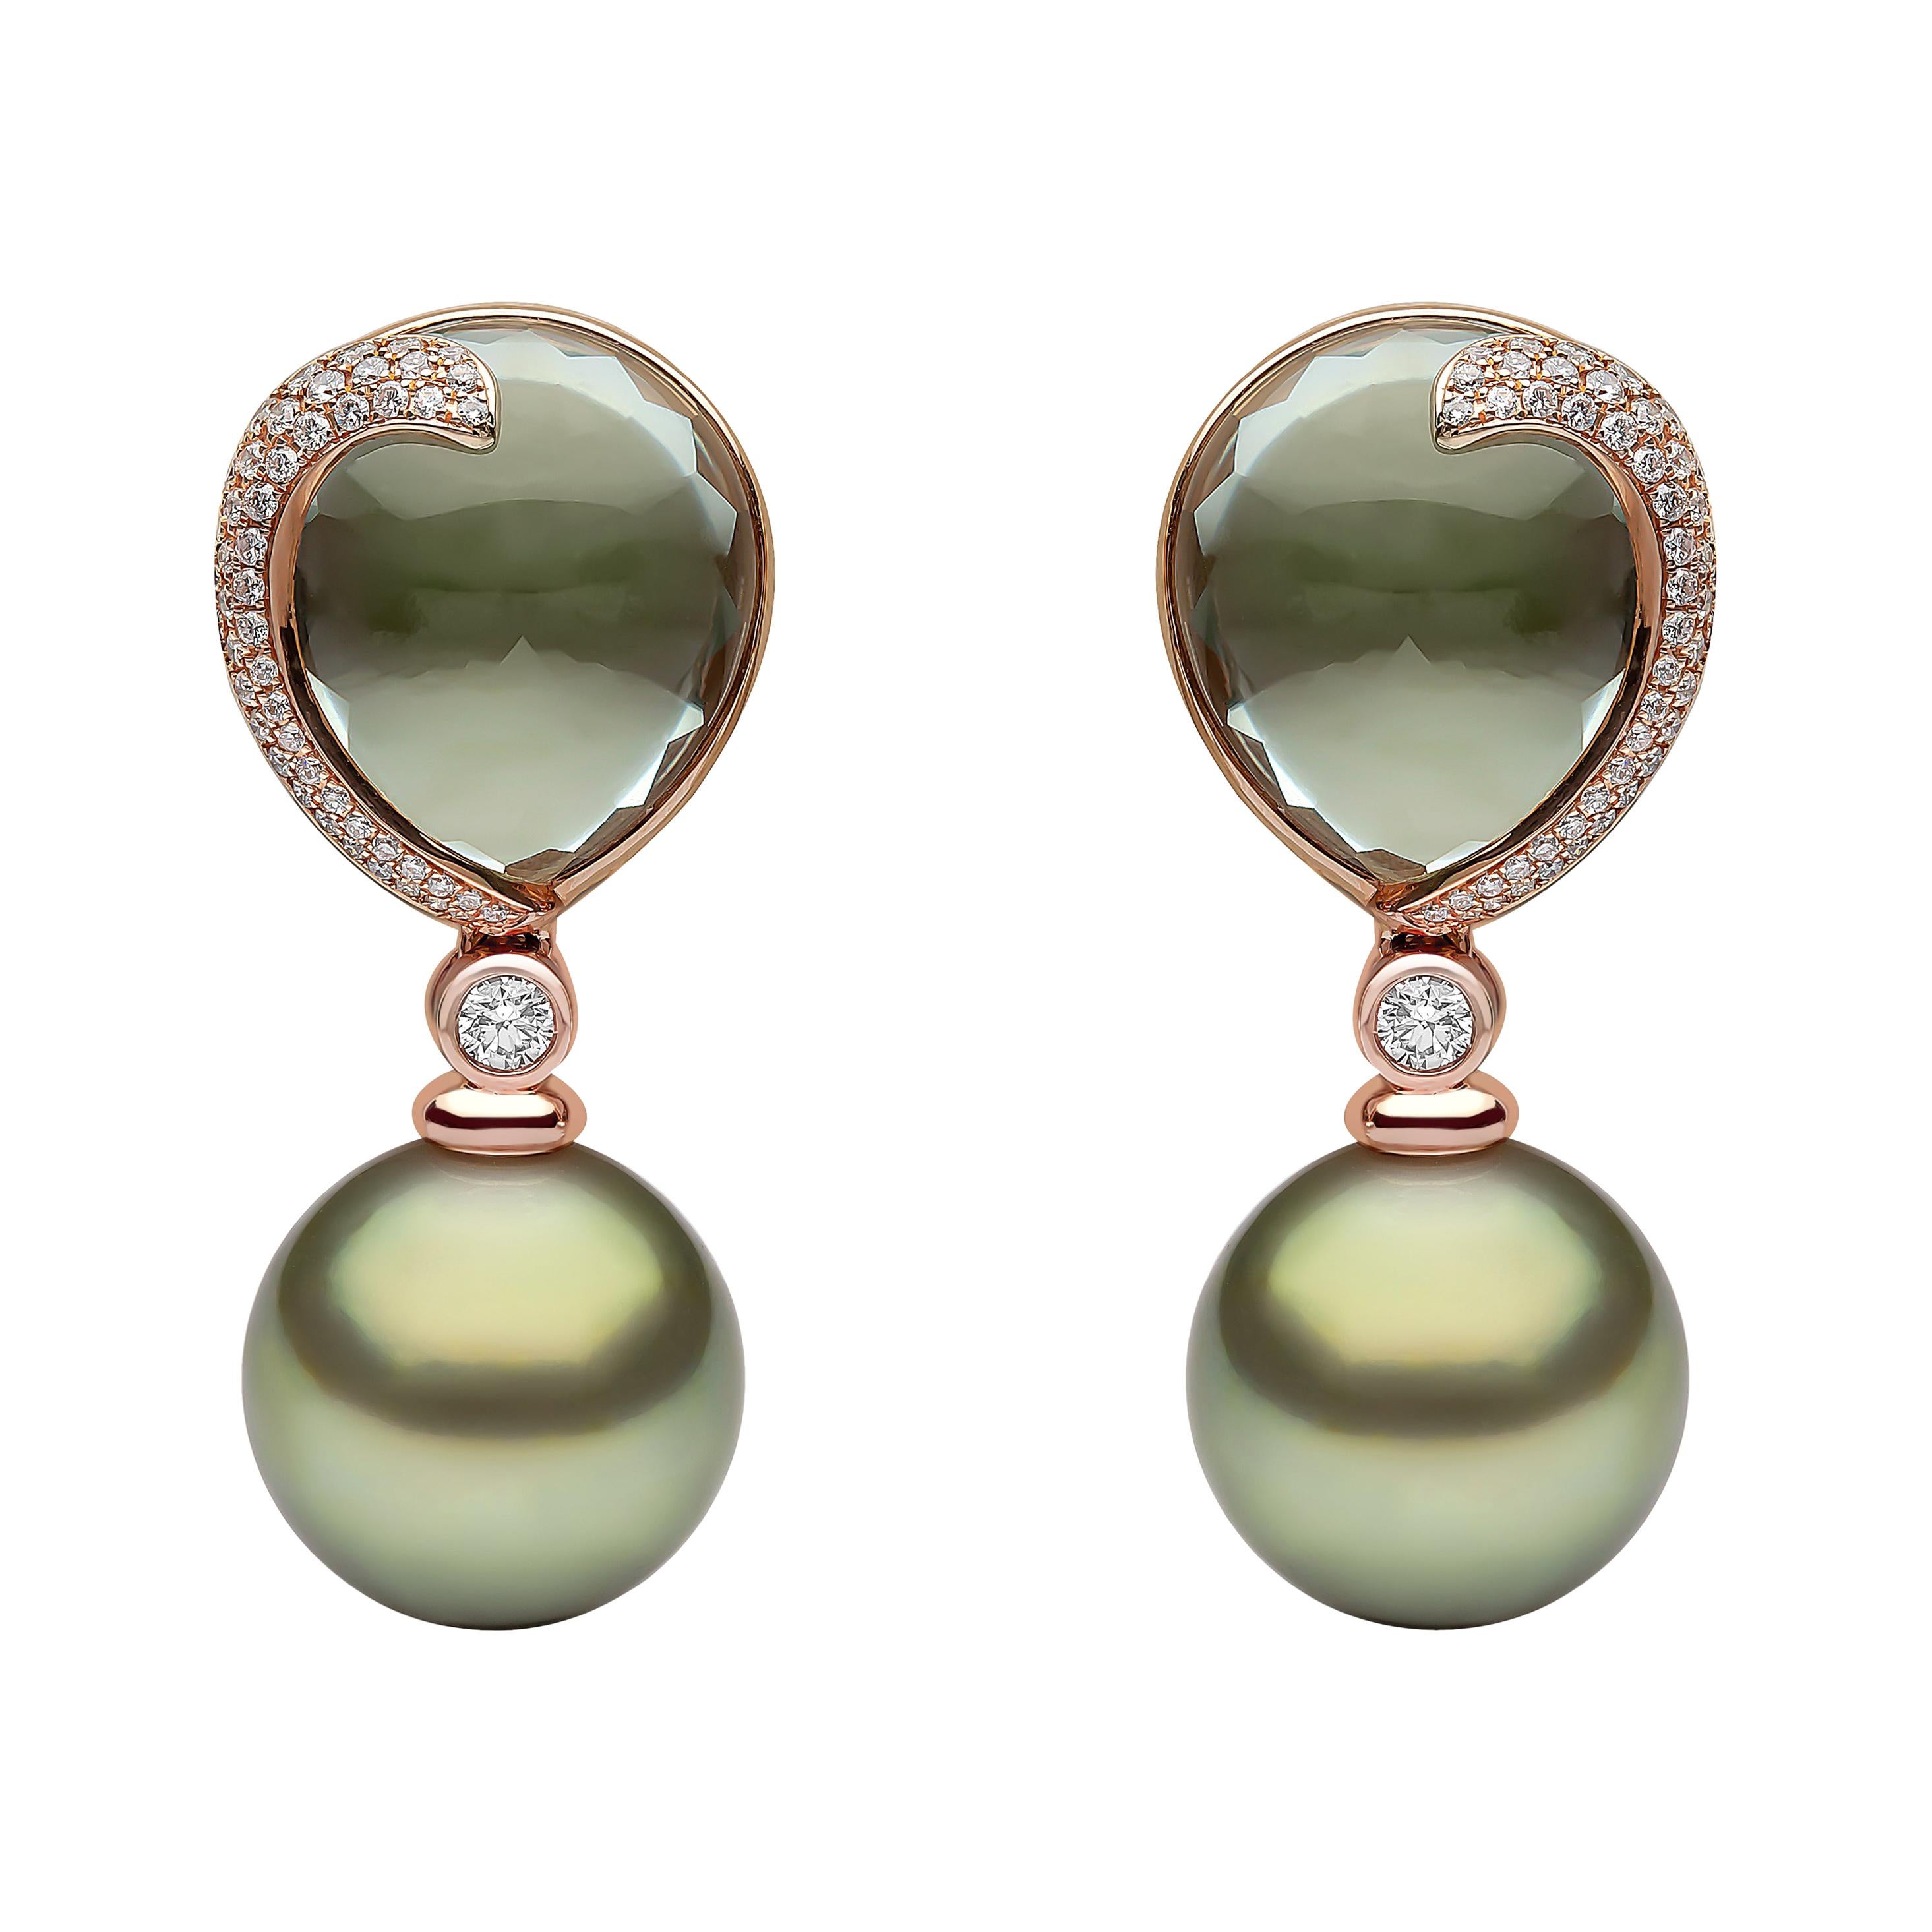 Yoko London Green Amethyst, Diamond and Pearl Earrings in 18 Karat Rose Gold